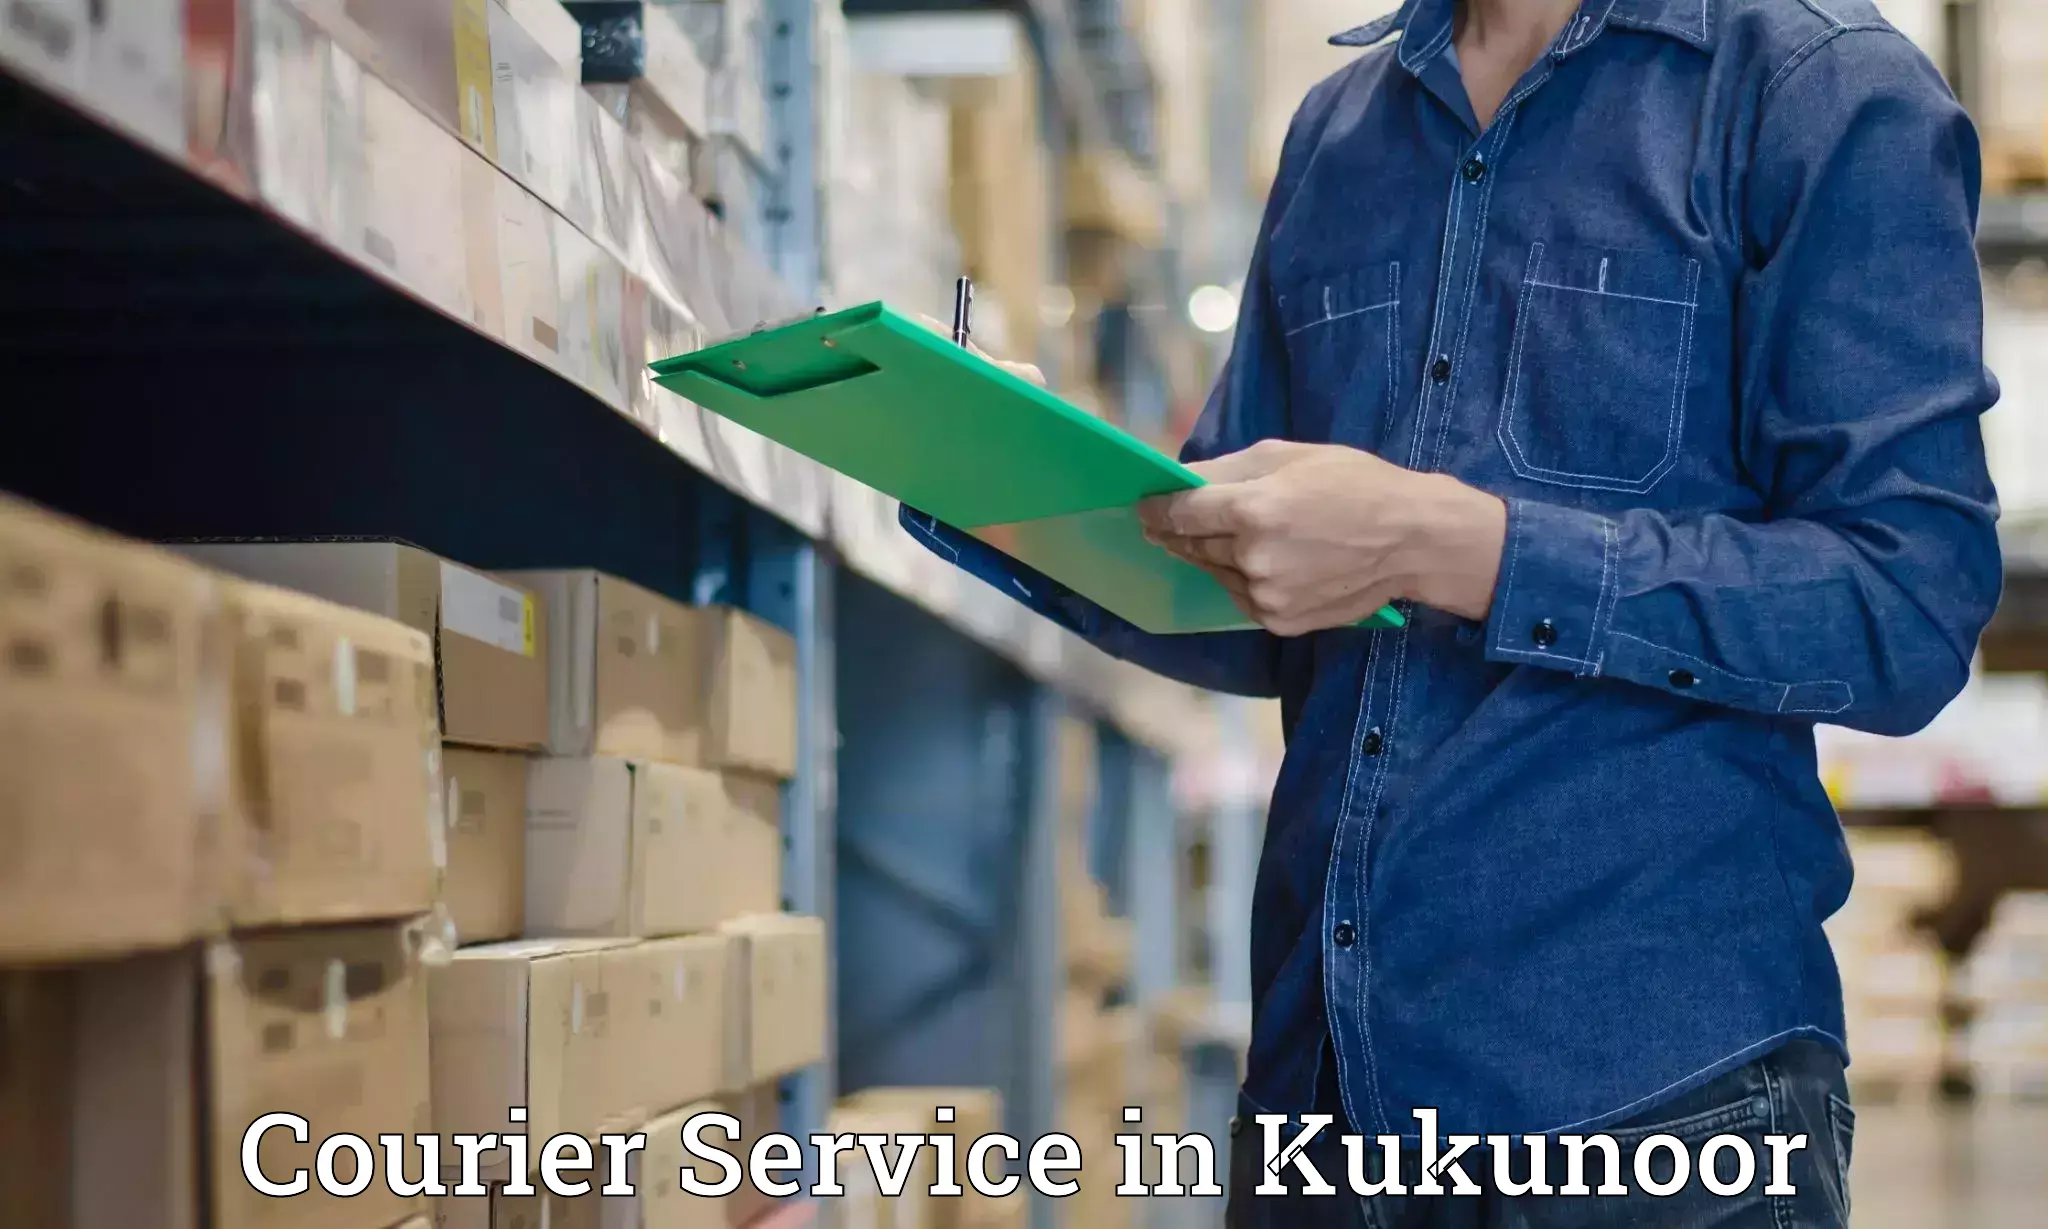 Customer-centric shipping in Kukunoor